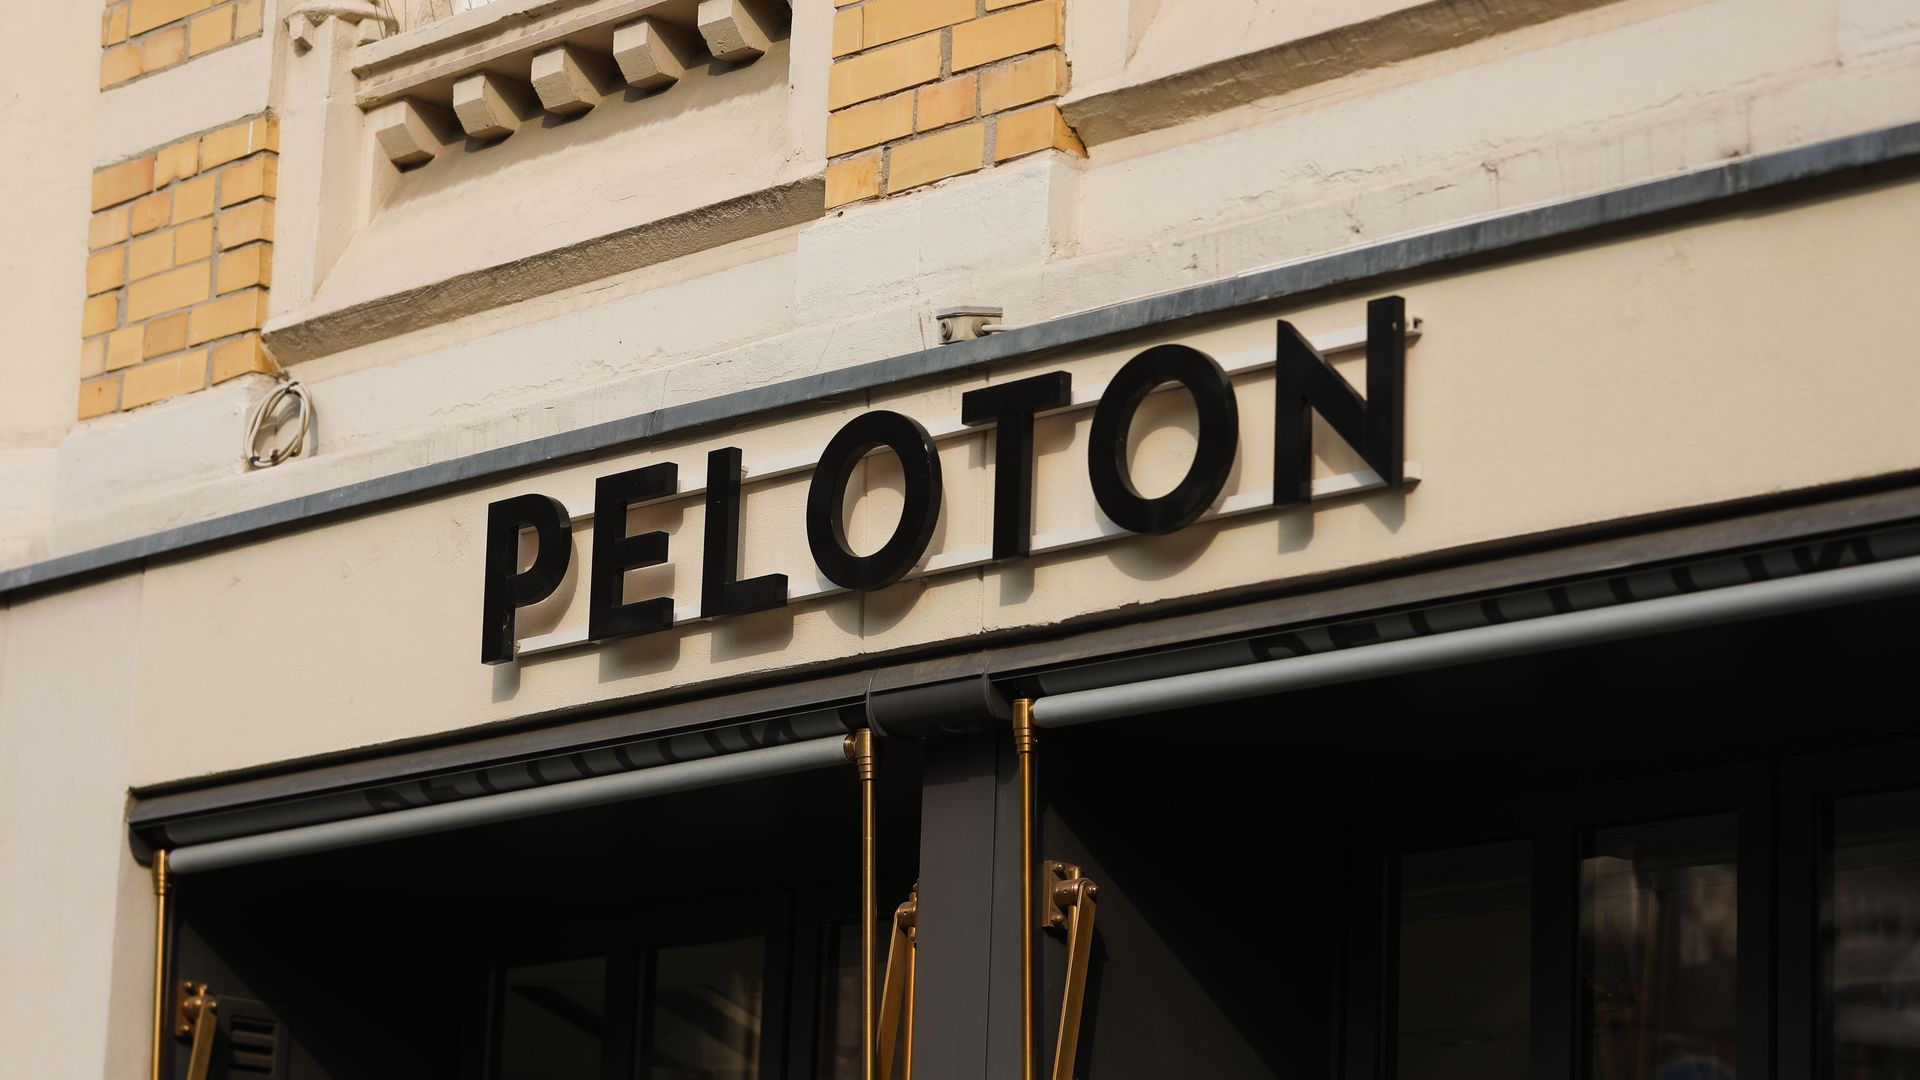 Picture of the Peloton logo